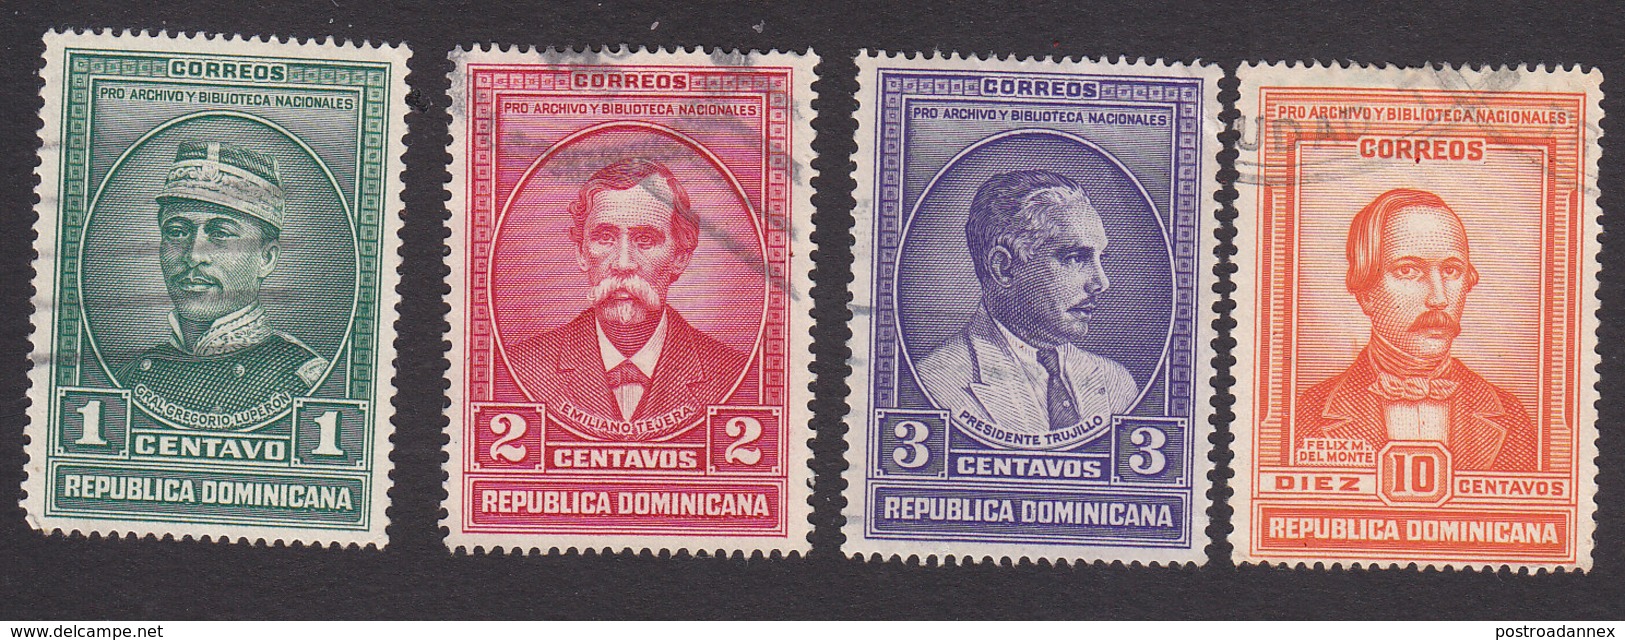 Dominican Republic, Scott #311-313, 316, Used, Famous Men Of Dominican Republic, Issued 1936 - Dominican Republic